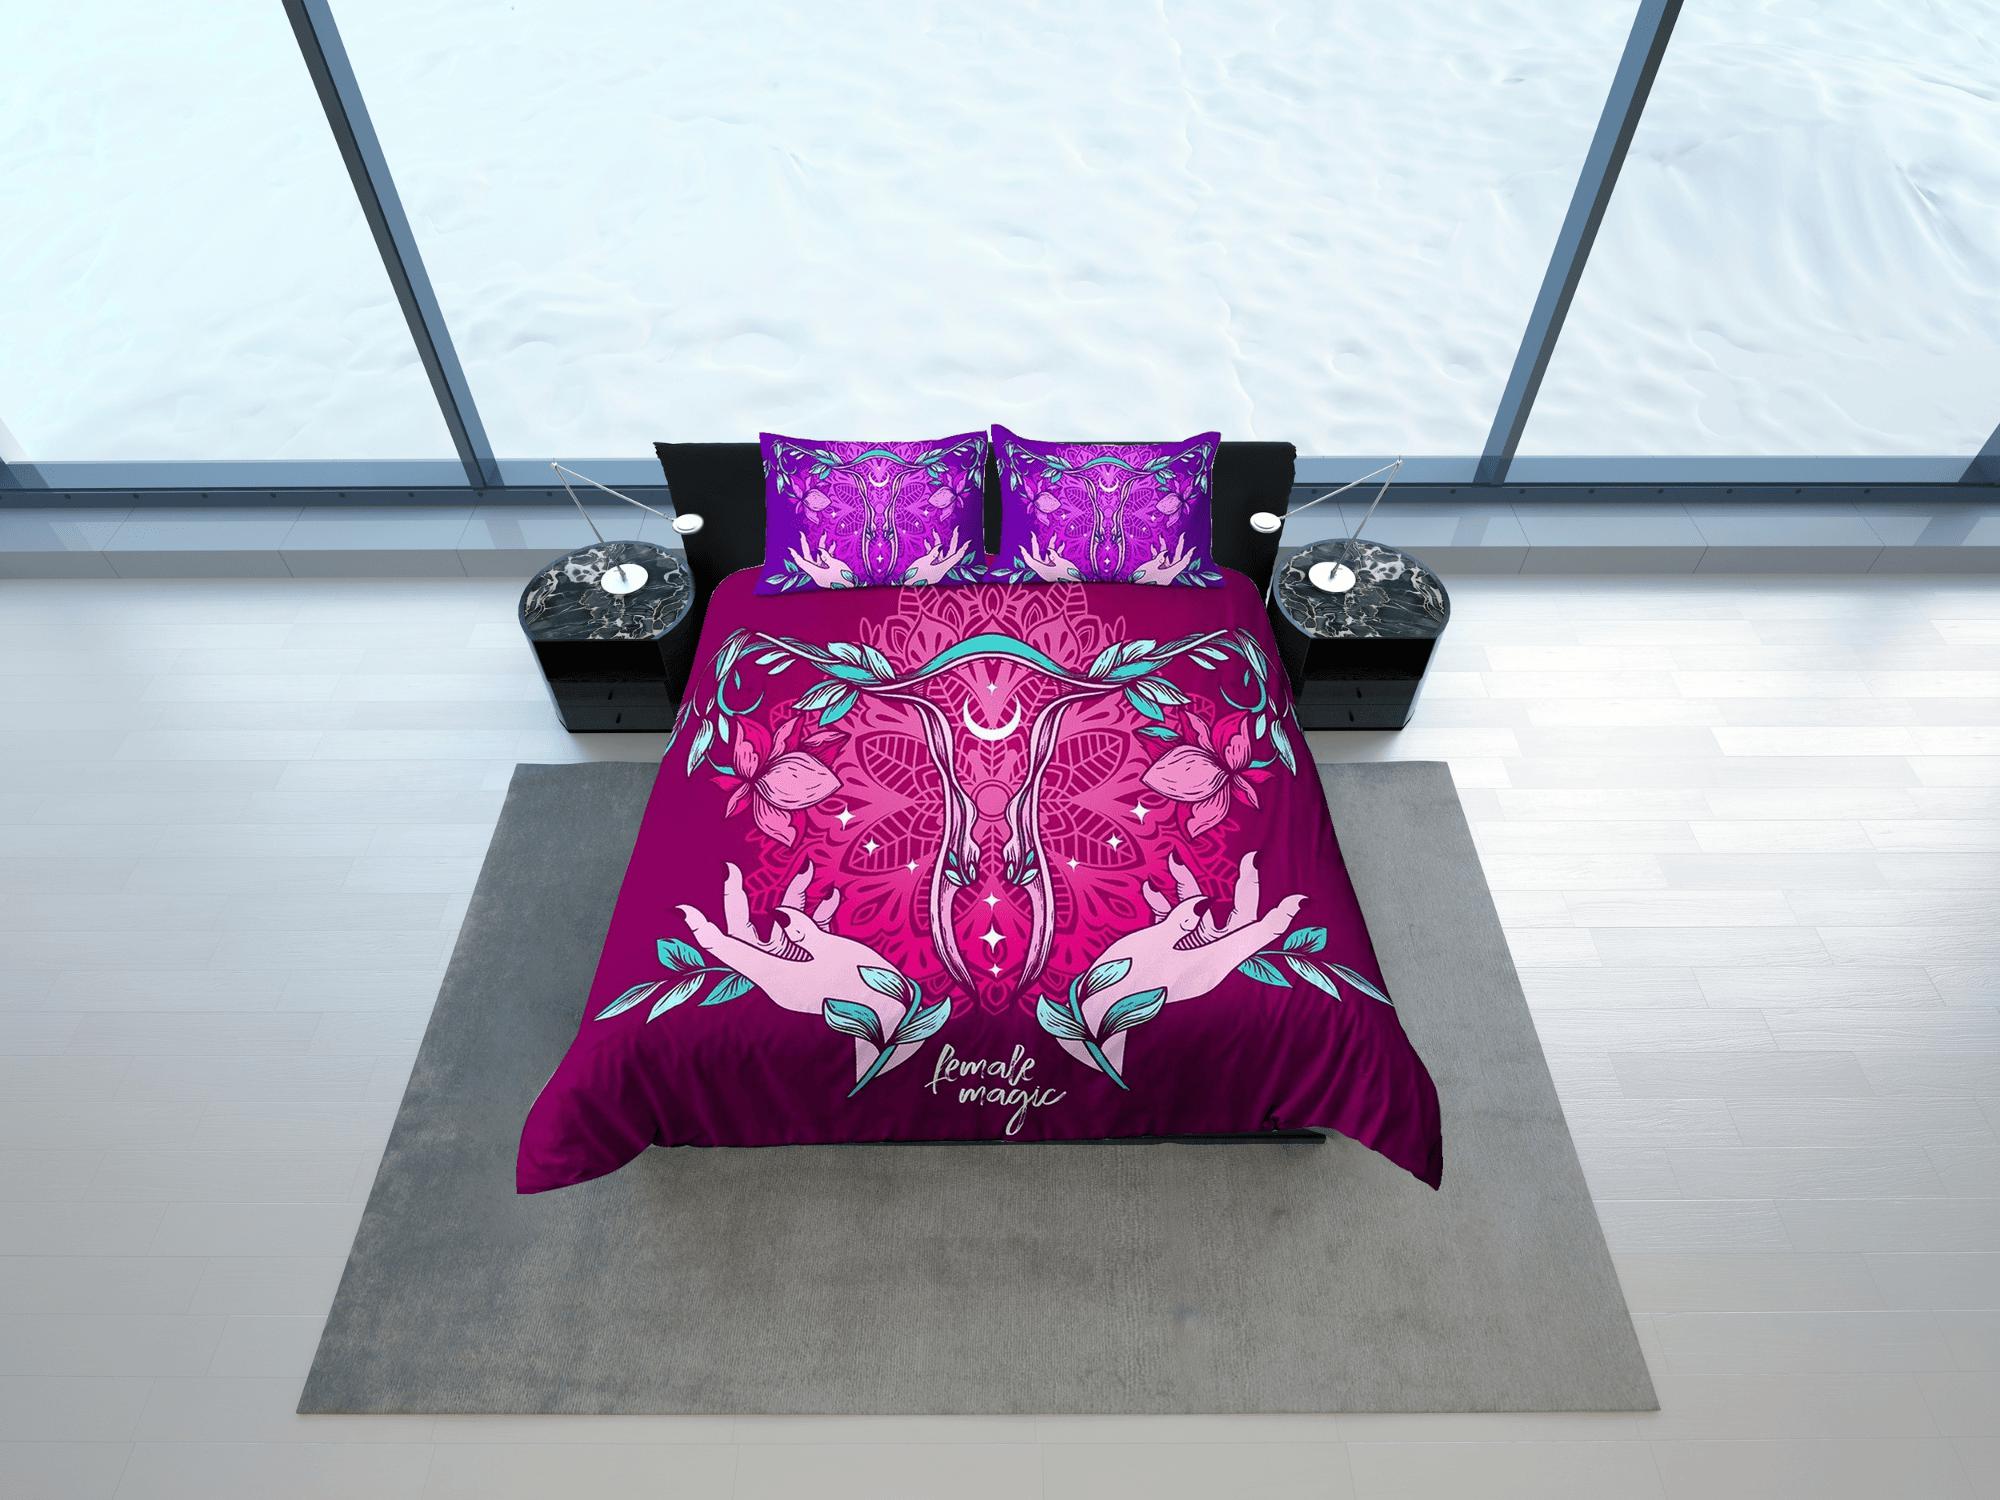 daintyduvet Mystical violet bedding, witchy decor dorm bedding, aesthetic duvet, boho bedding set full king queen, astrology gifts, gothic art